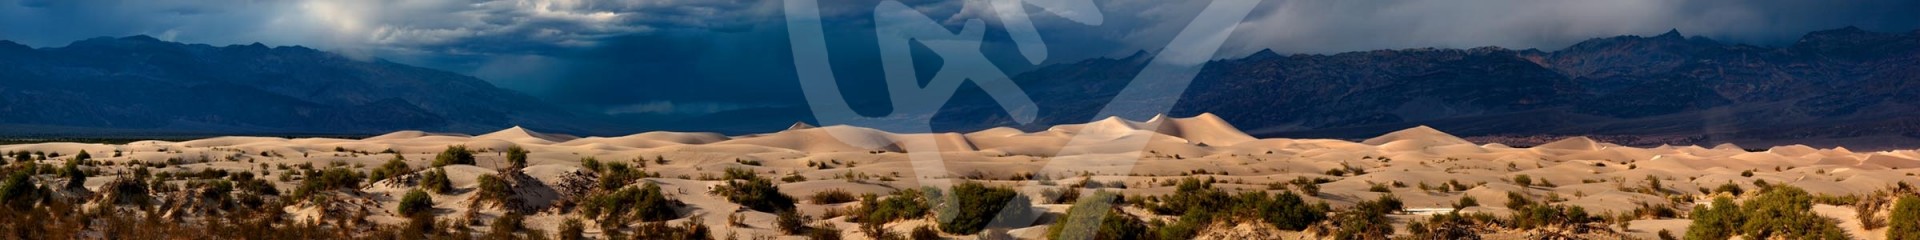 CALIFORNIA Sand Dunes, Death Valley